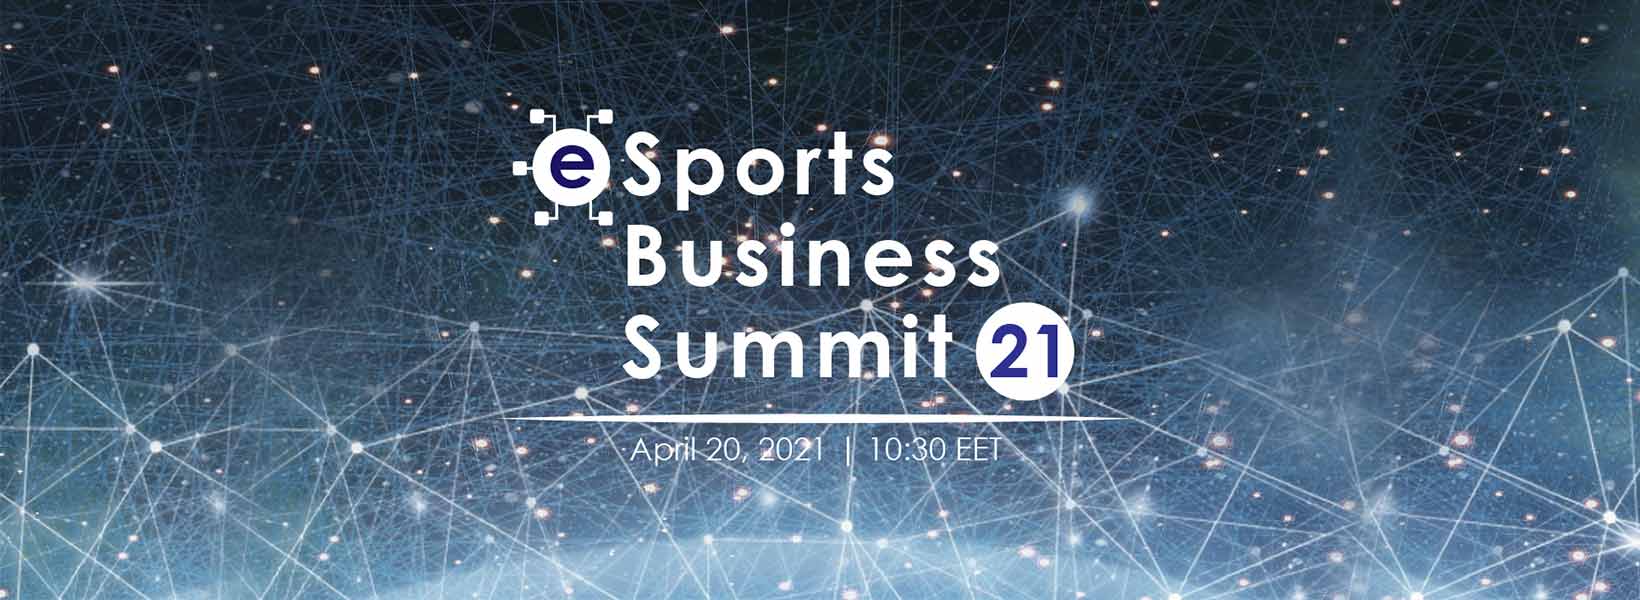 esports business summit 21